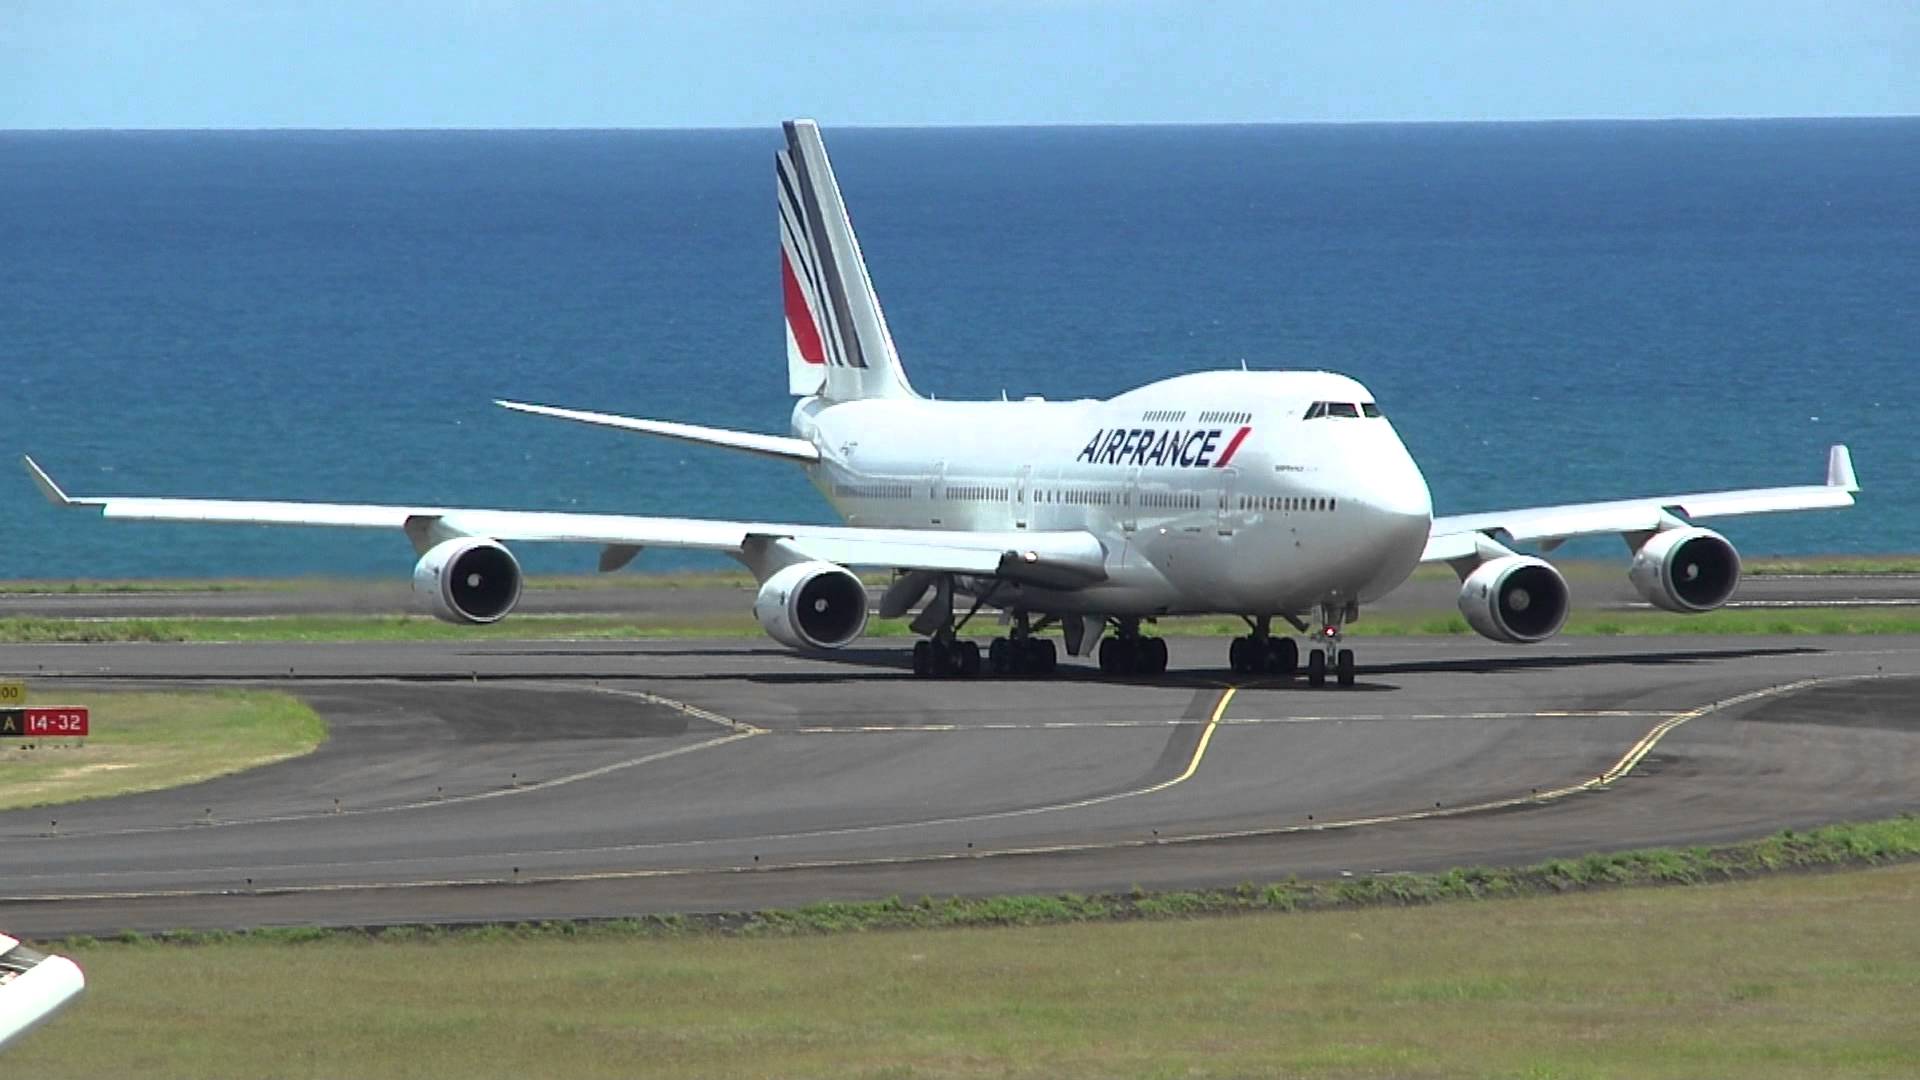 Atterrissage Boeing 747-400 Air France 3580 @ Roland Garros (FMEE/RUN)